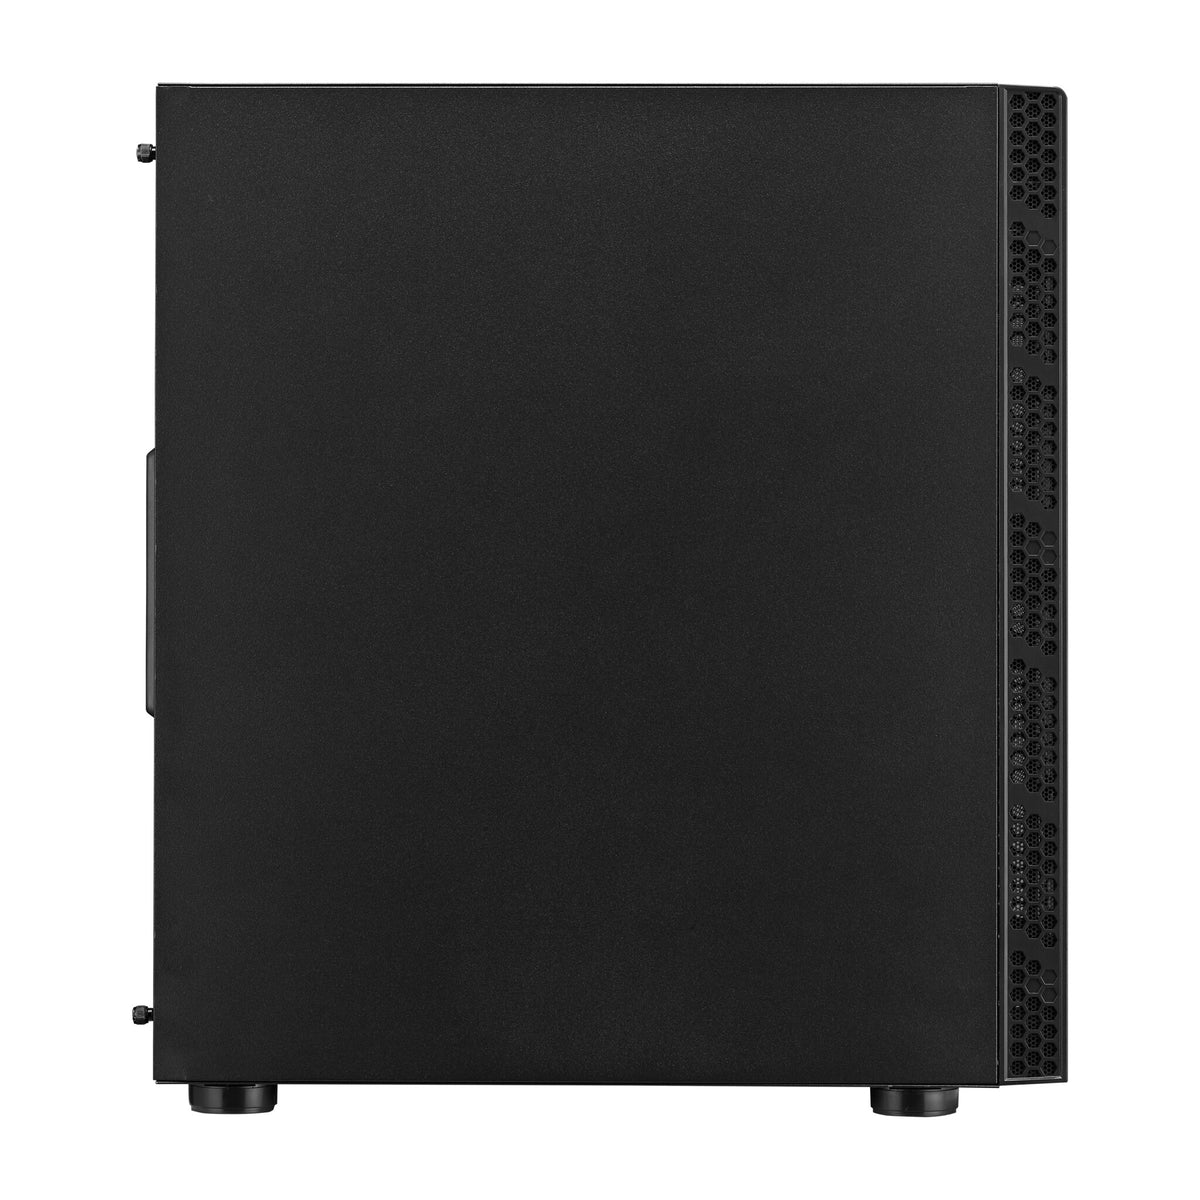 Cooler Master MasterBox MB600L V2 - ATX Mid Tower Case in Black